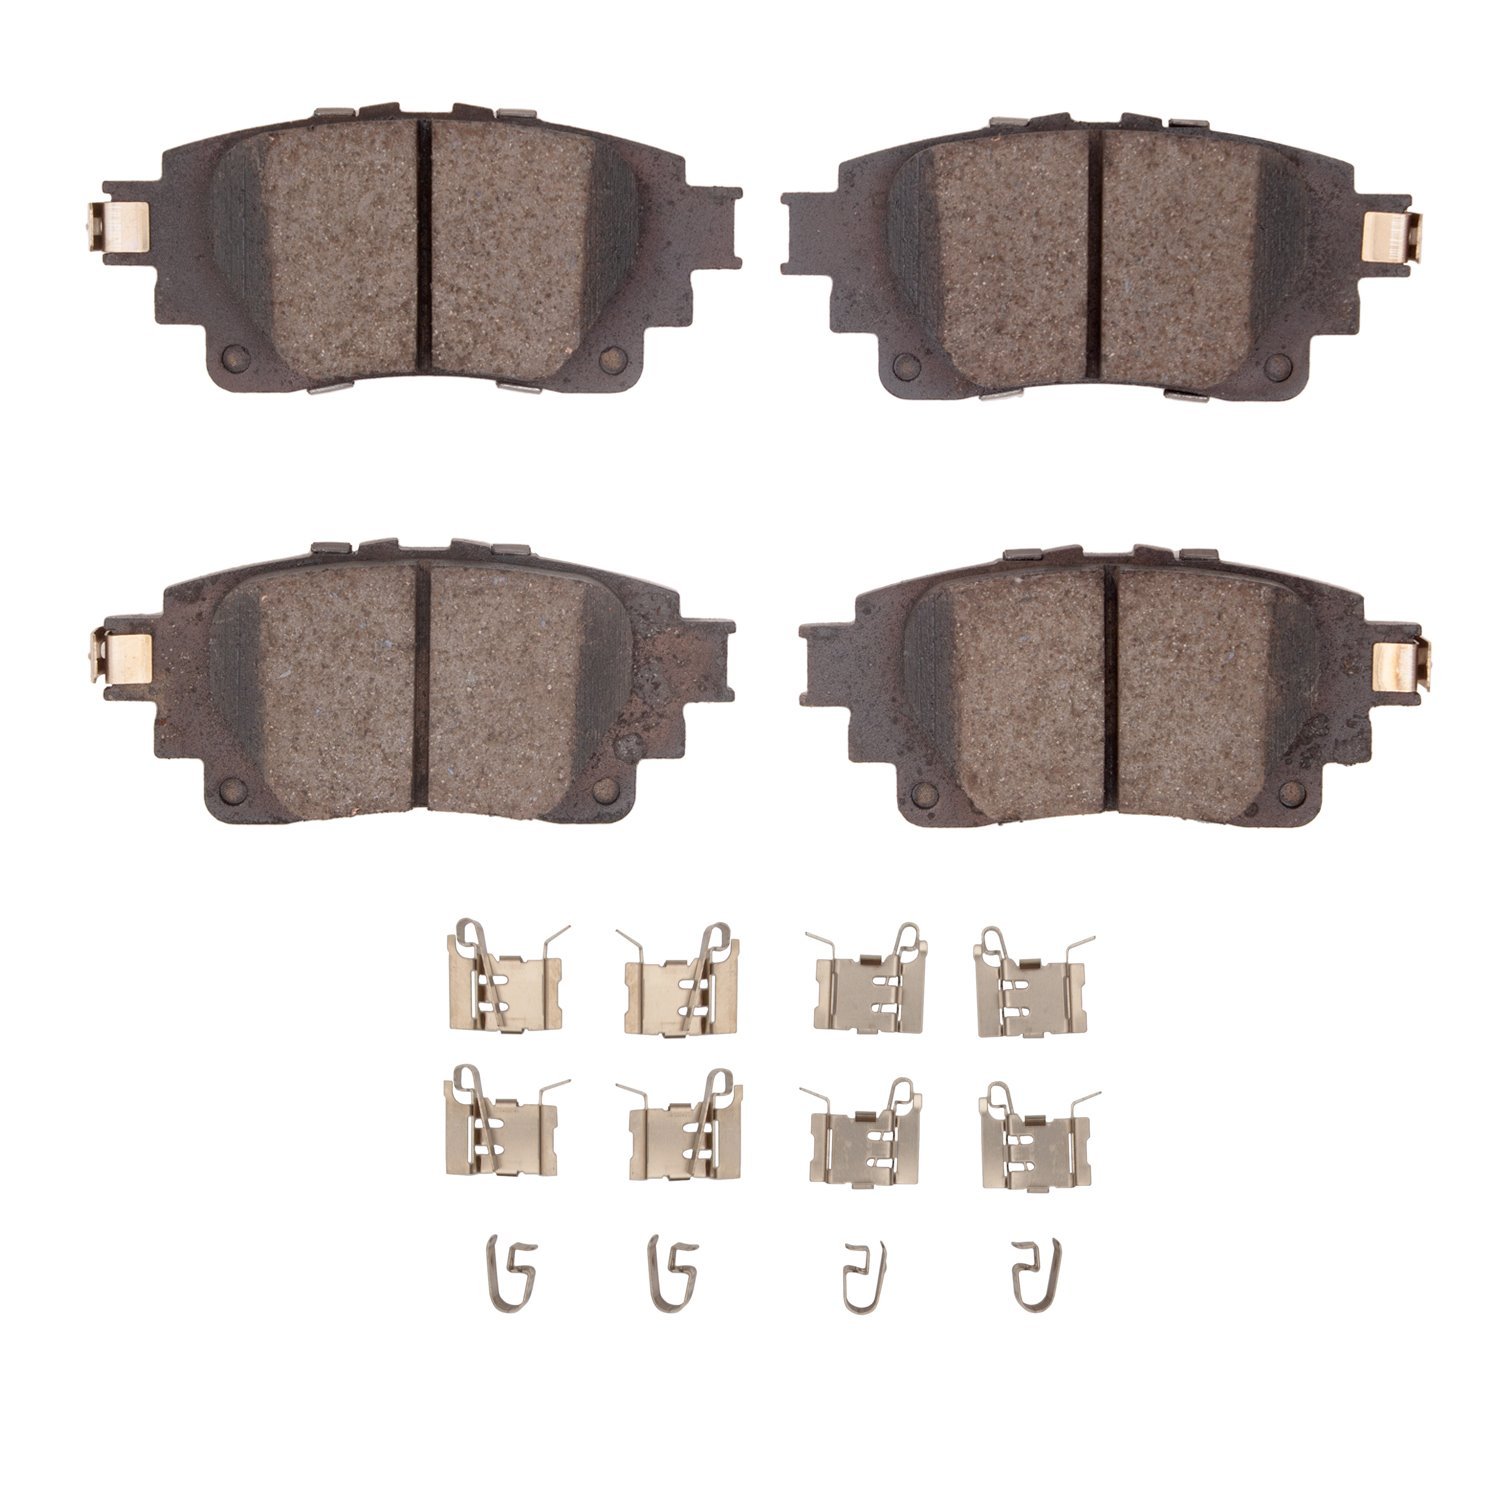 1551-2183-01 5000 Advanced Ceramic Brake Pads & Hardware Kit, Fits Select Lexus/Toyota/Scion, Position: Rear